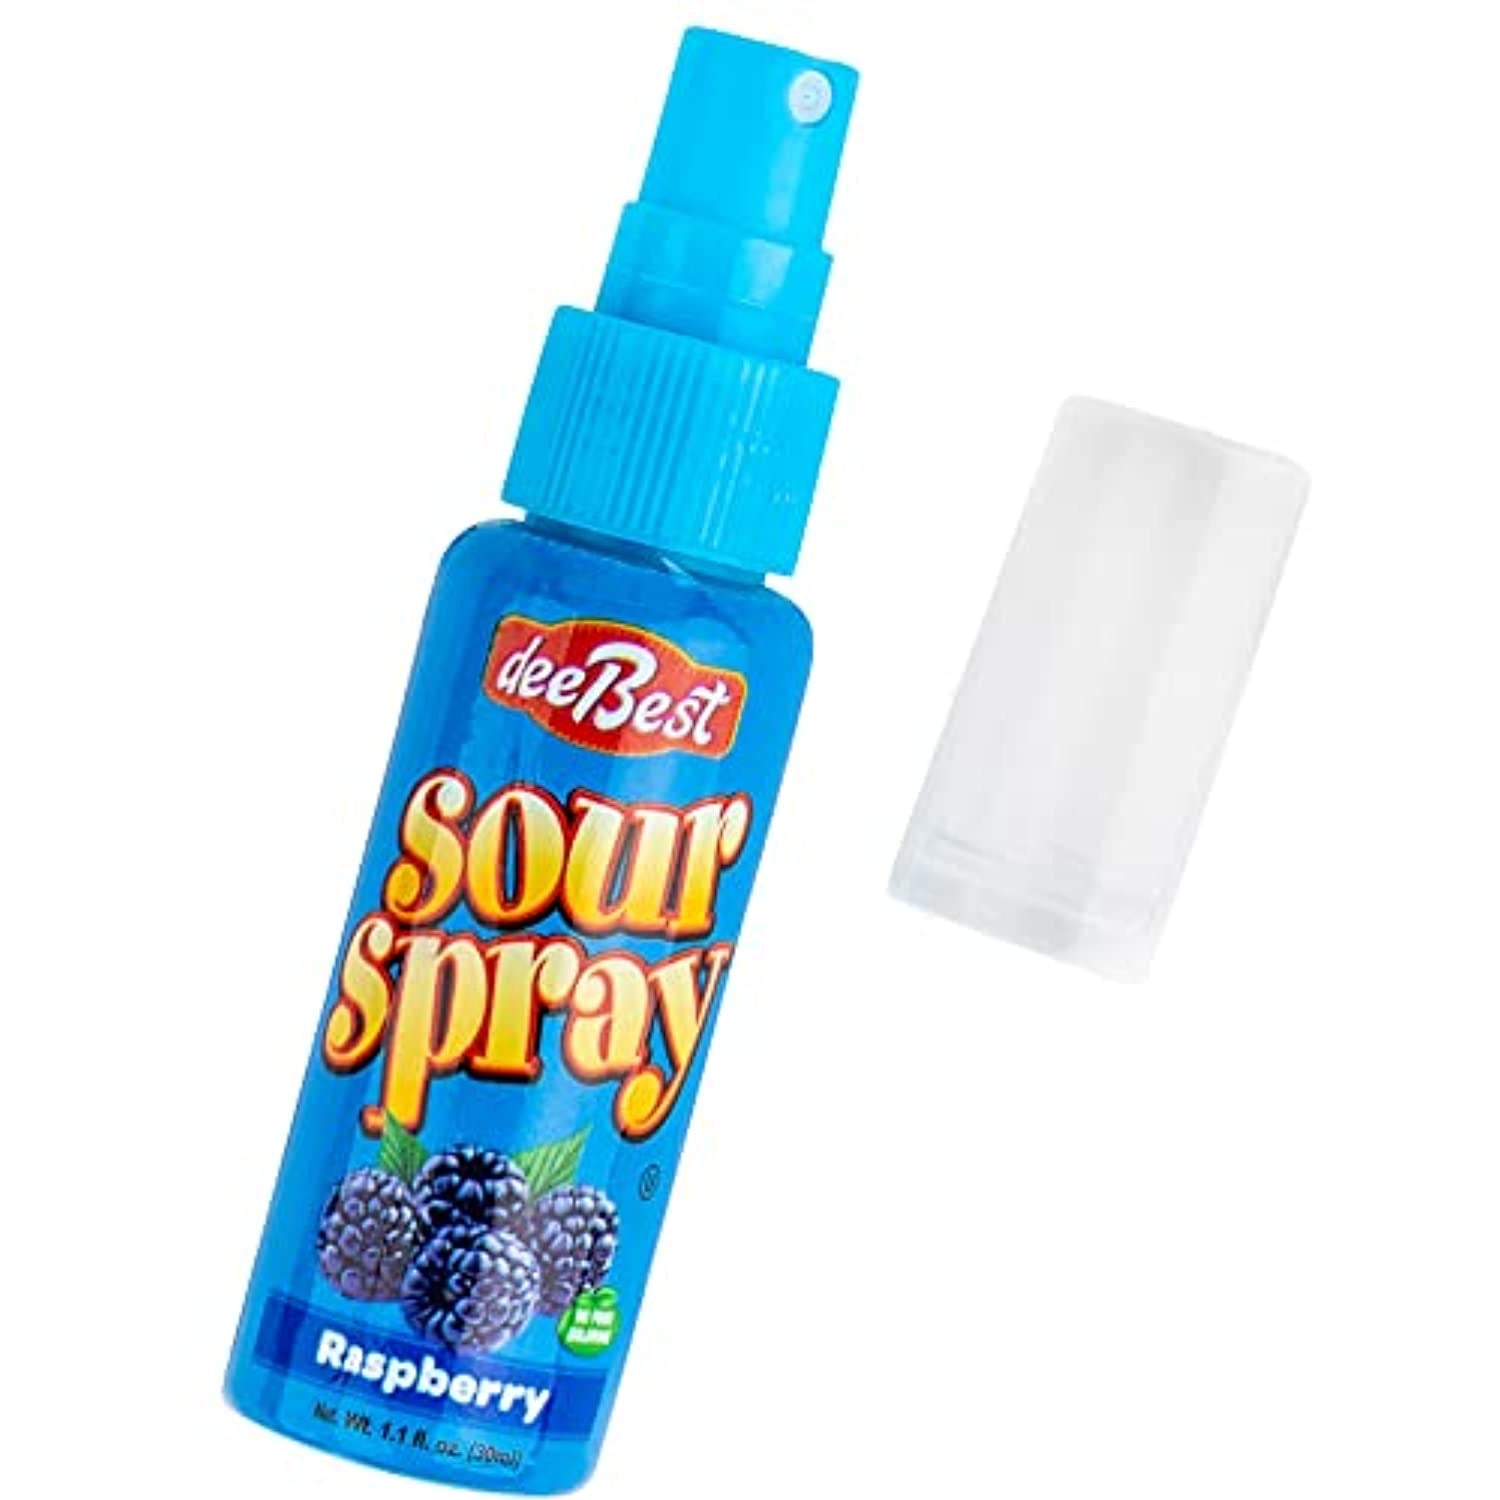 DeeBest Sour Spray Raspberry